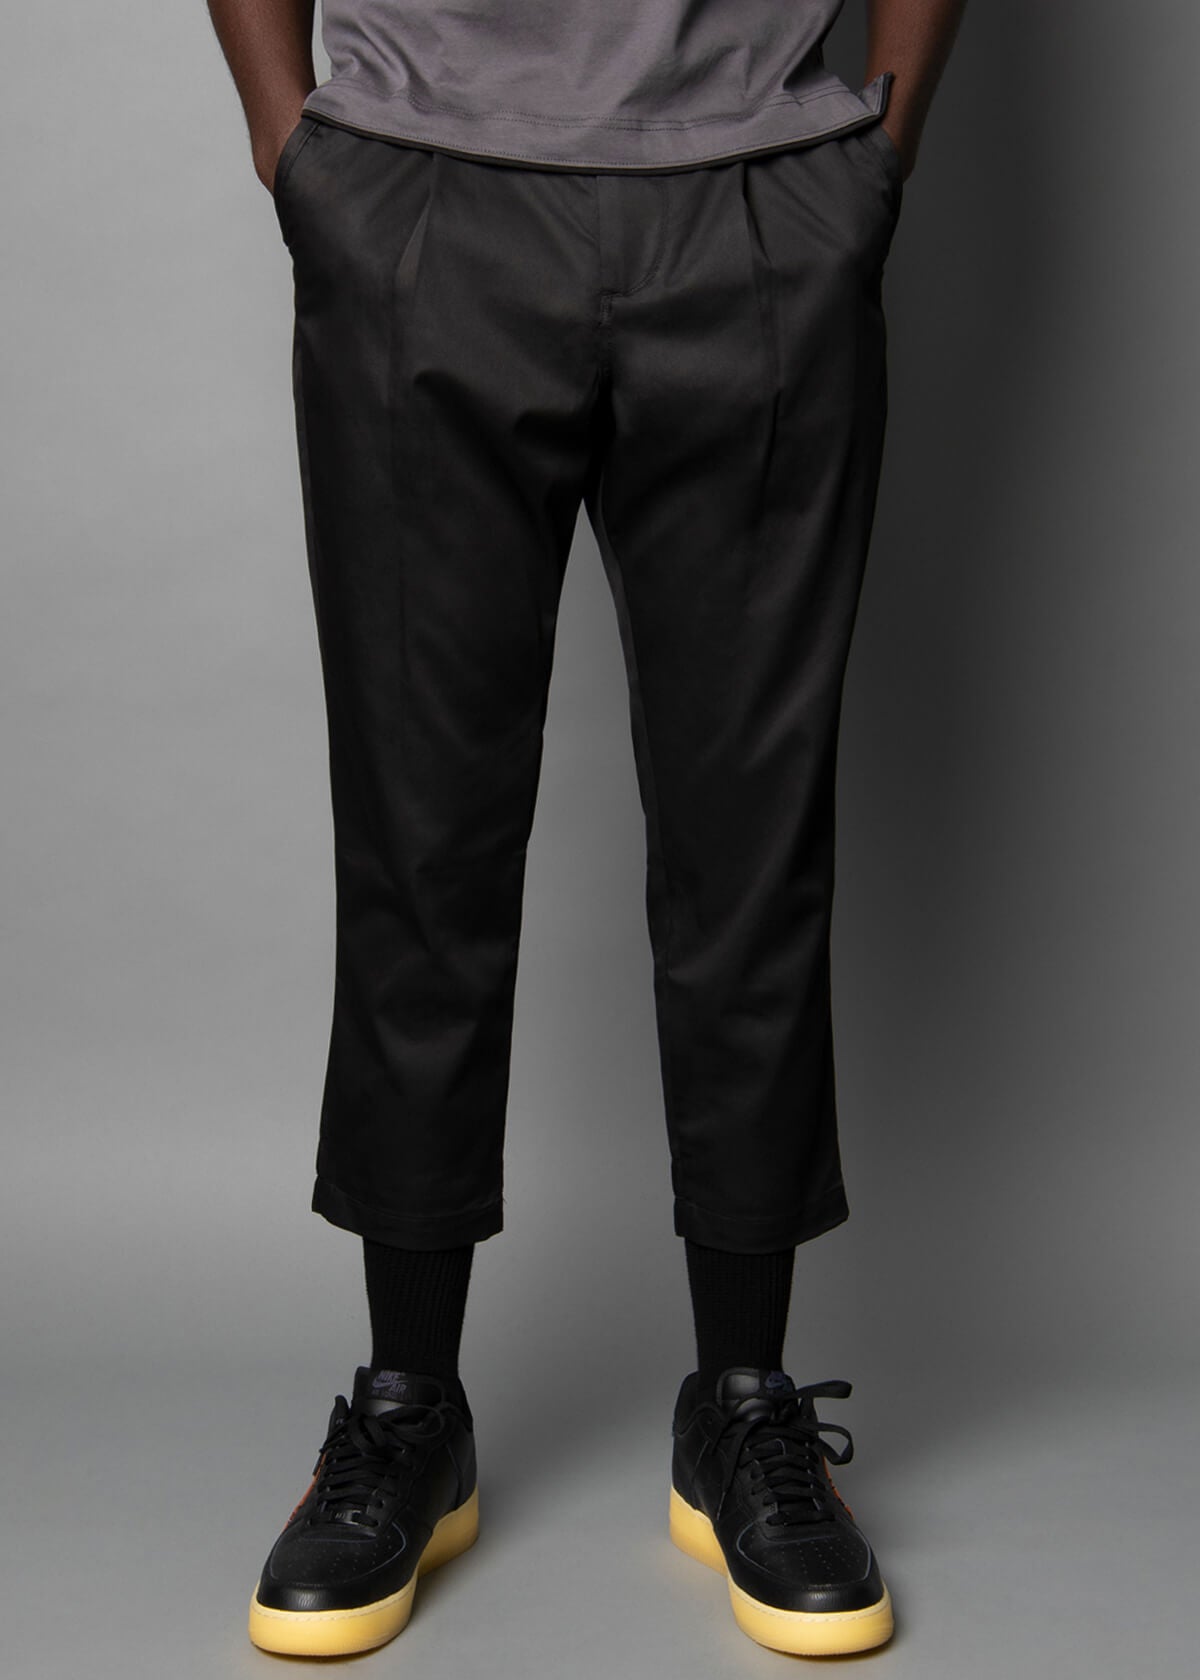 lux fabrication black pants for men